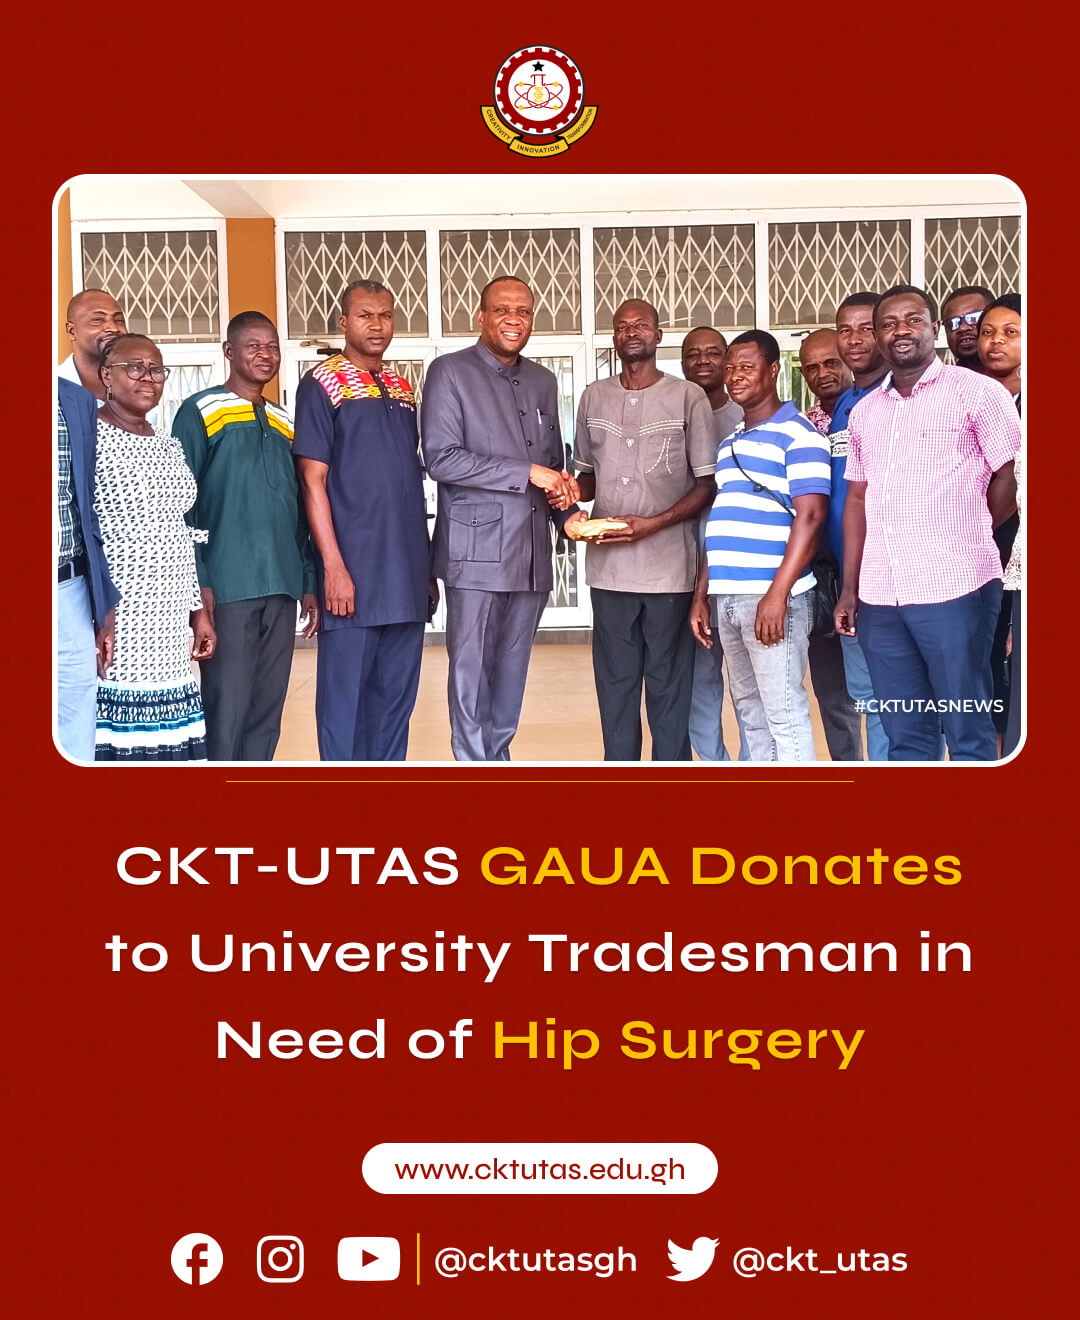 CKT-UTAS GAUA DONATES TO SUPPORT SURGERY